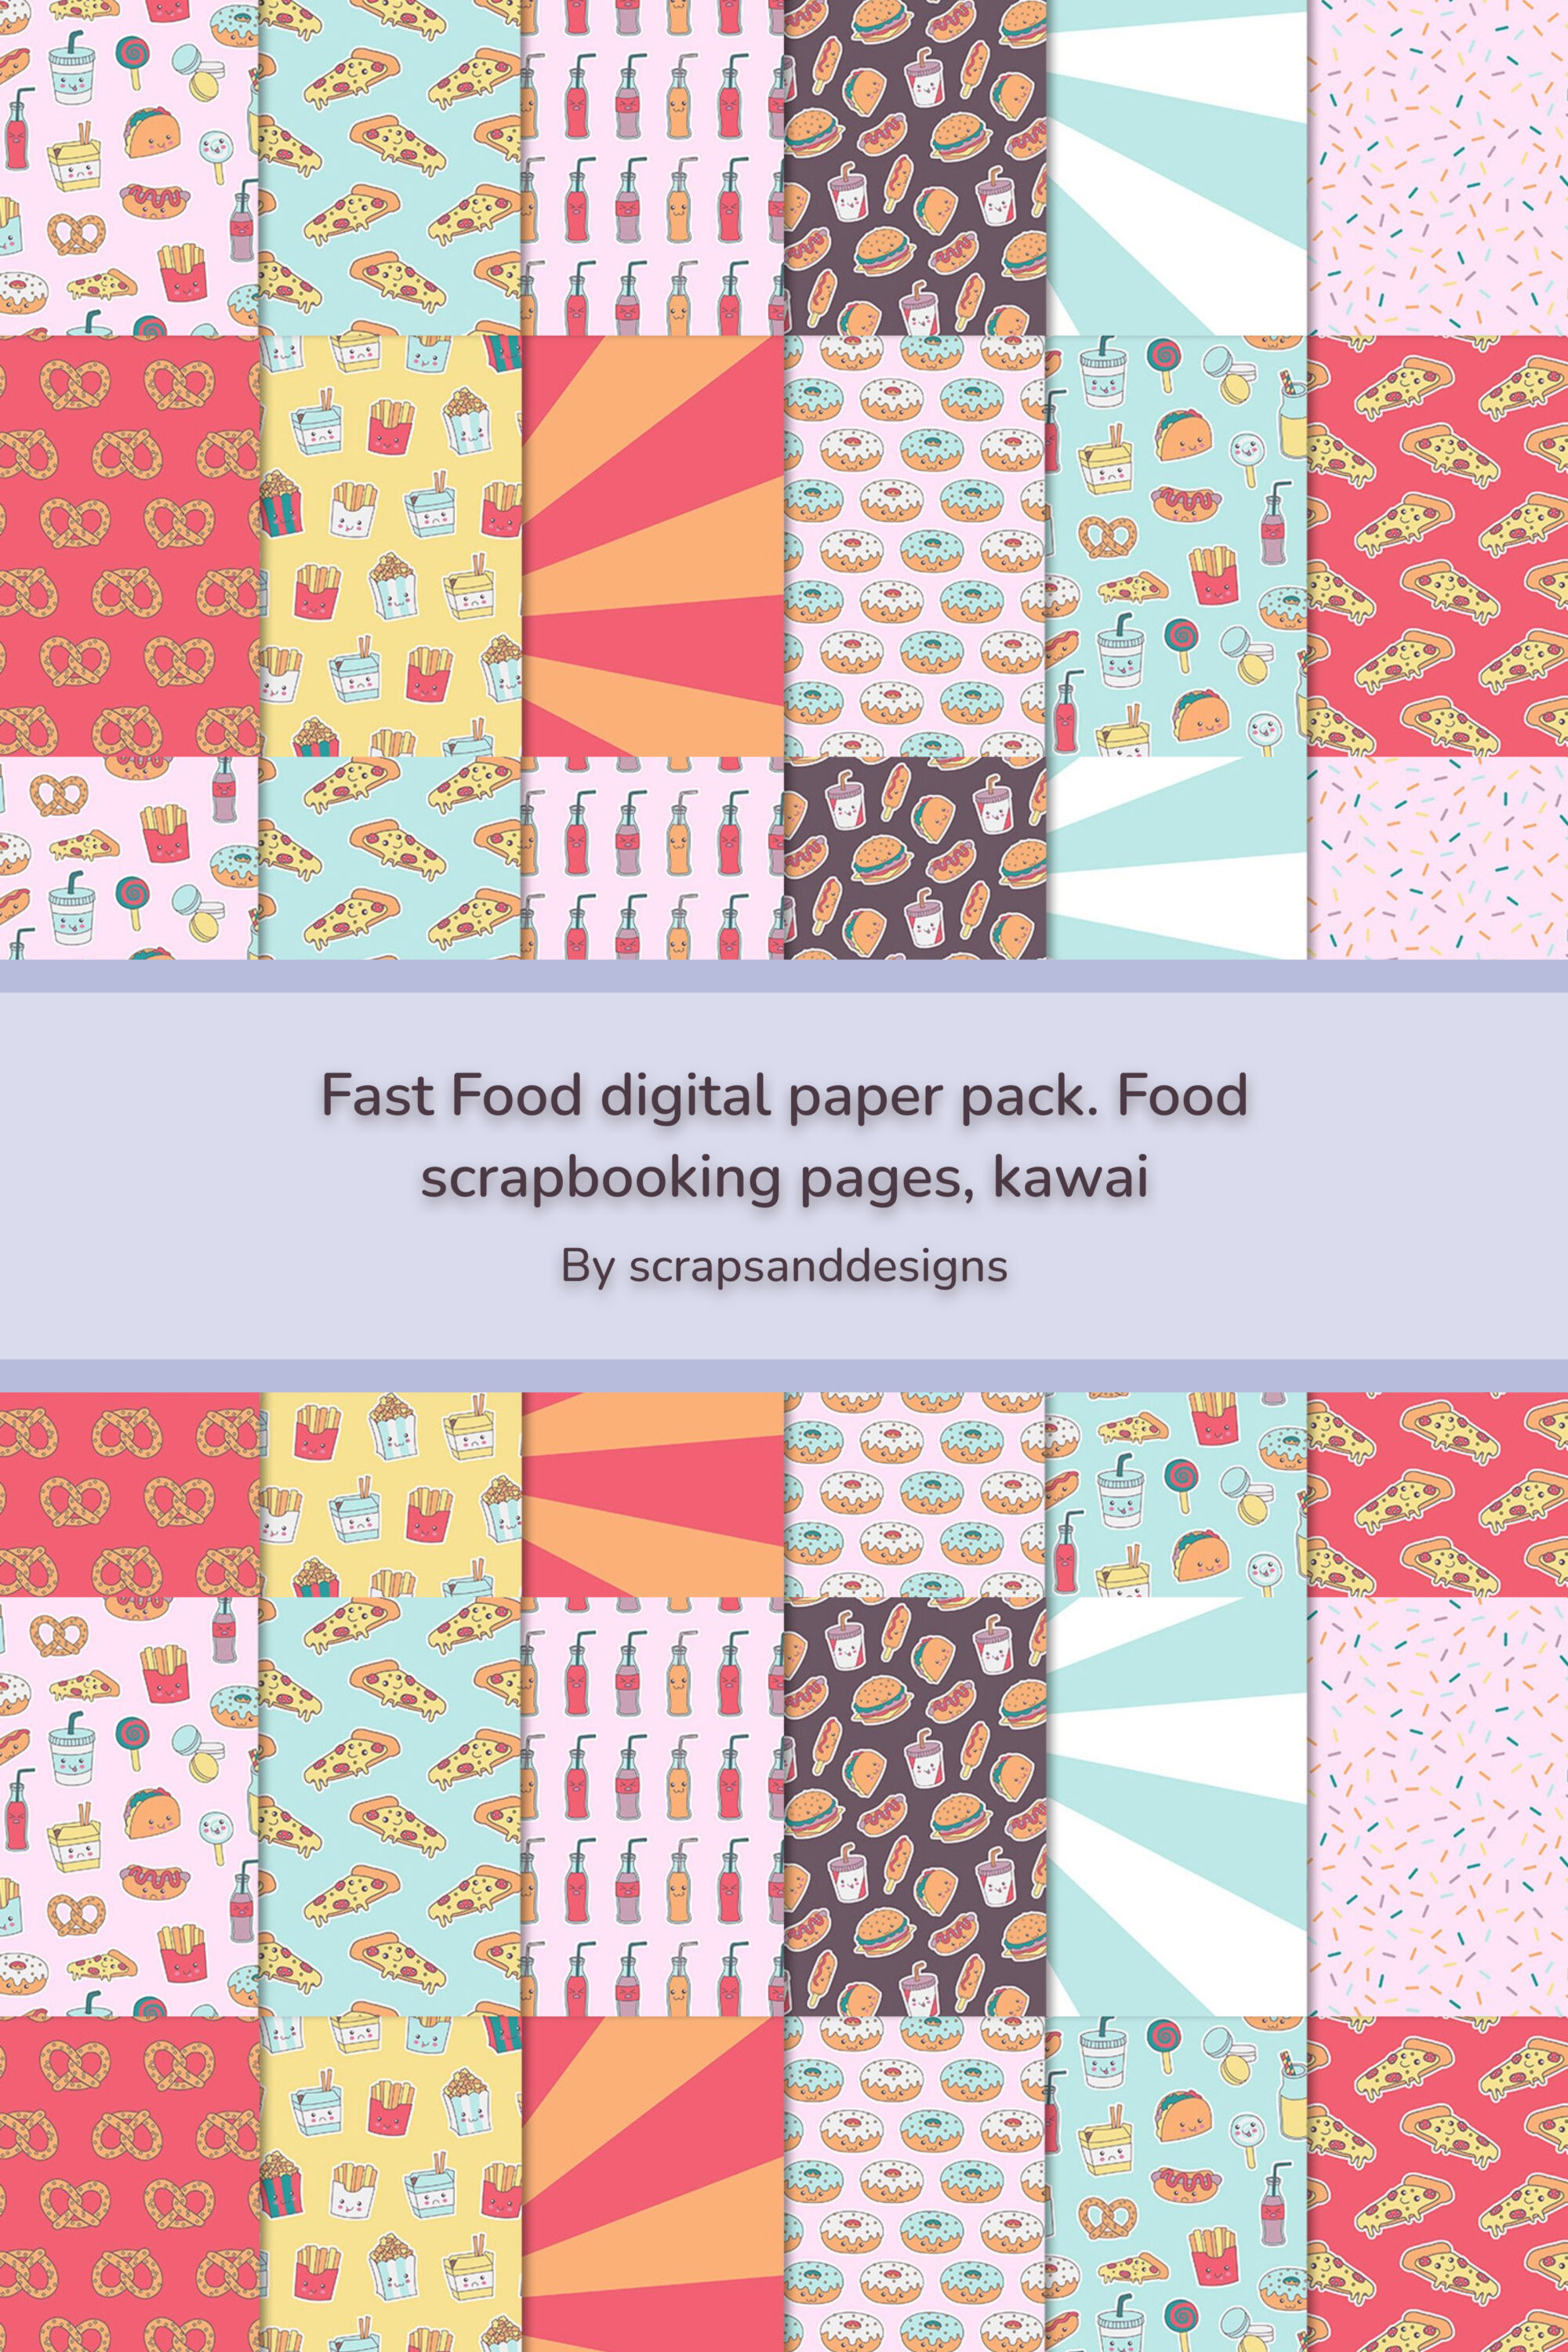 Fast food digital paper pack. food scrapbooking pages kawai of pinterest.